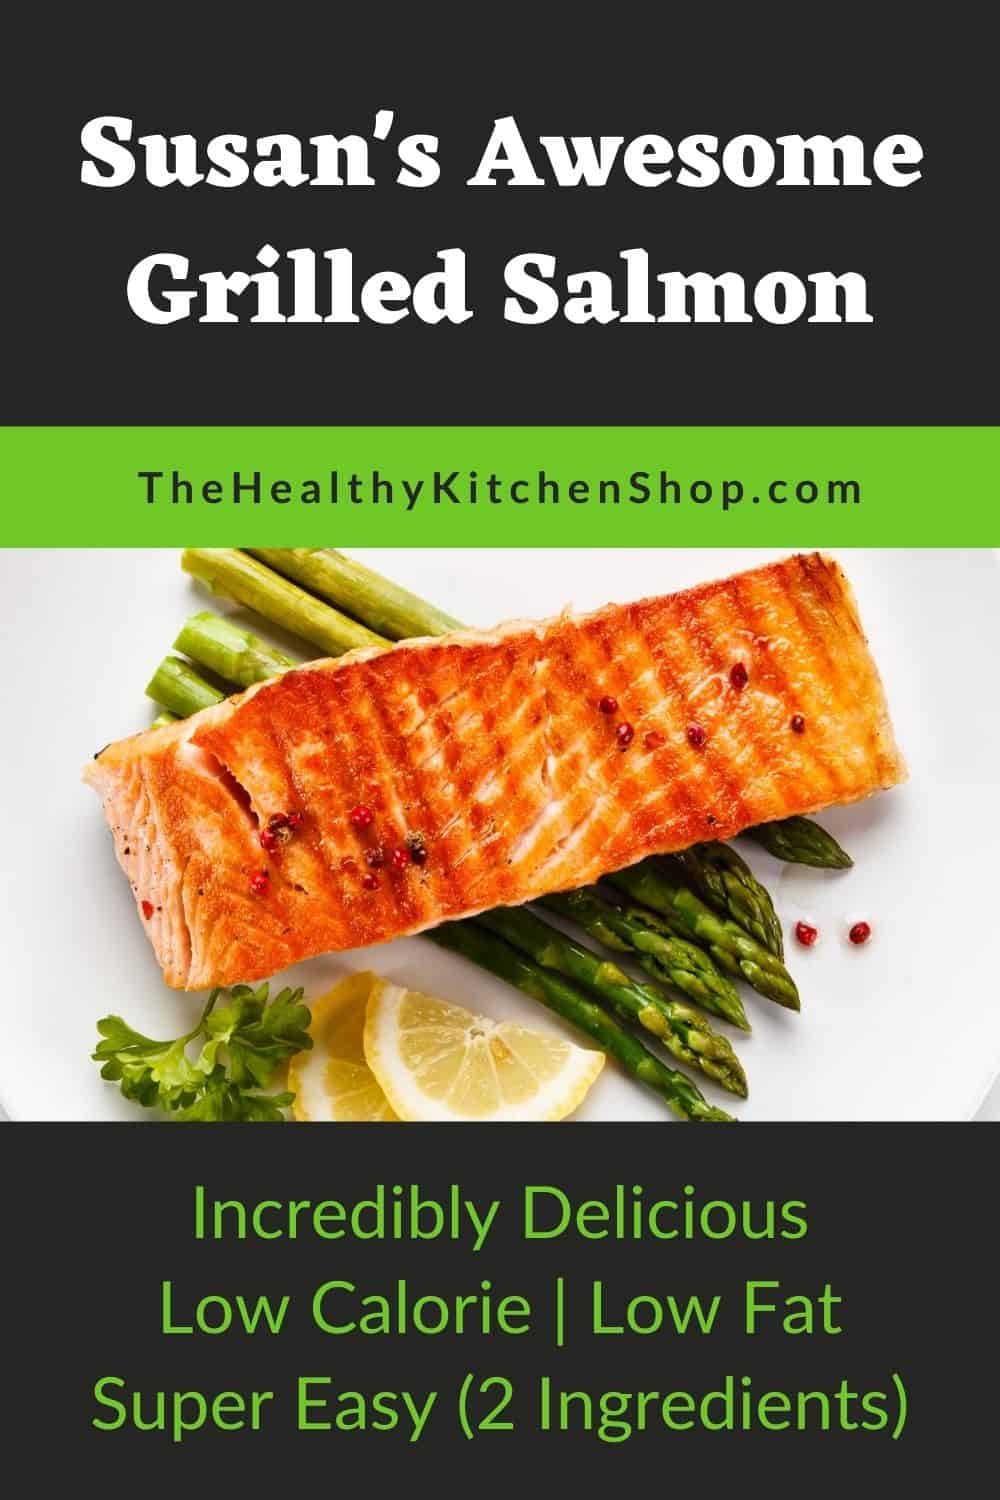 Grilled Salmon Recipe with a Bonus